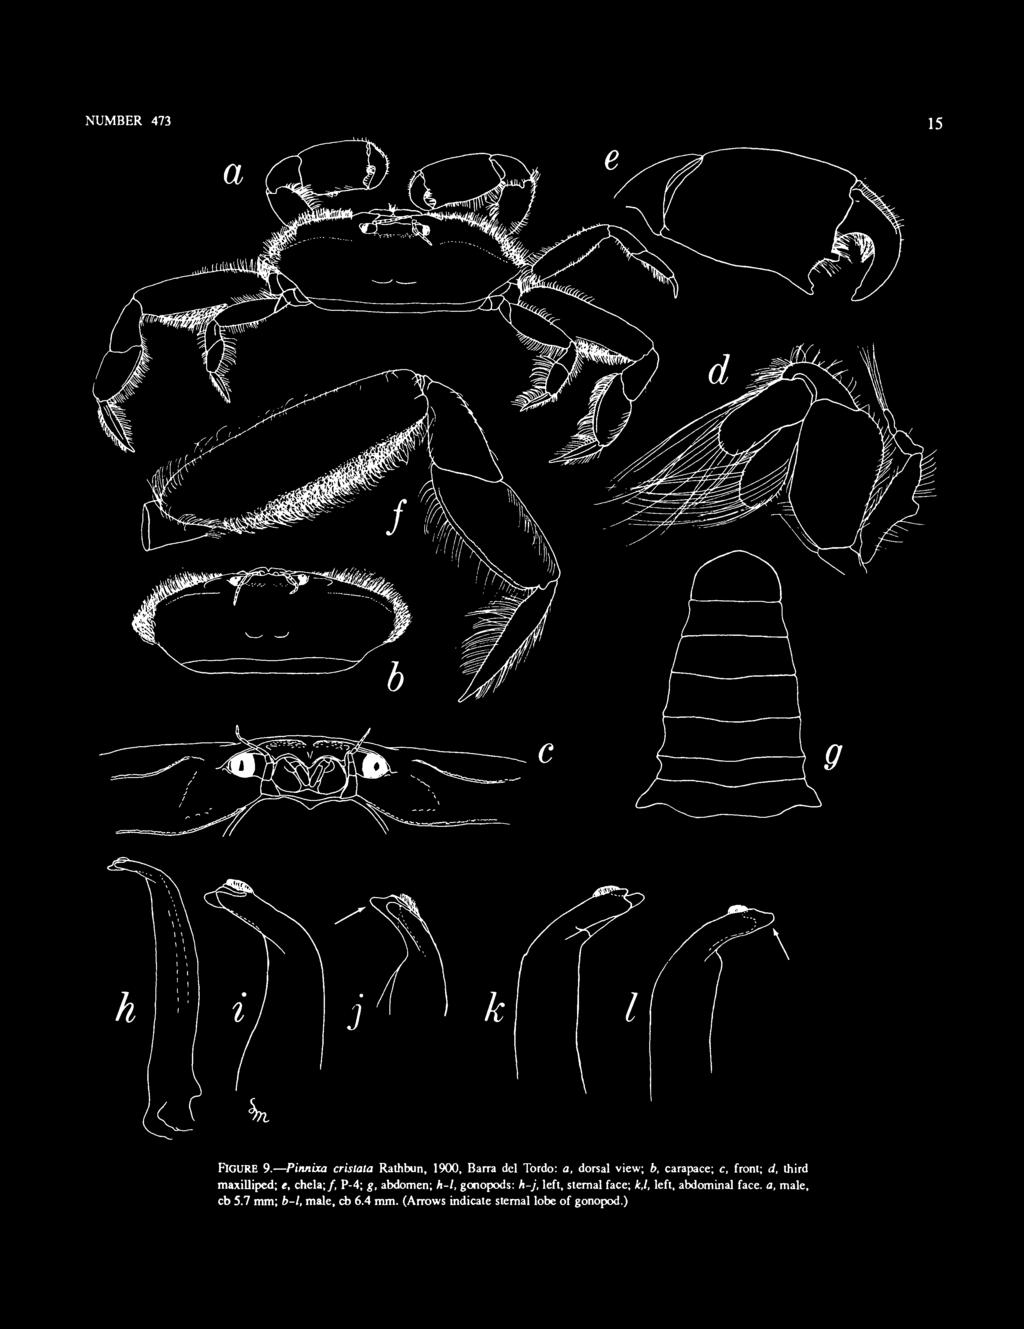 c, front; d, third maxilliped; e, chela;/, P-4; g, abdomen; h-l, gonopods: